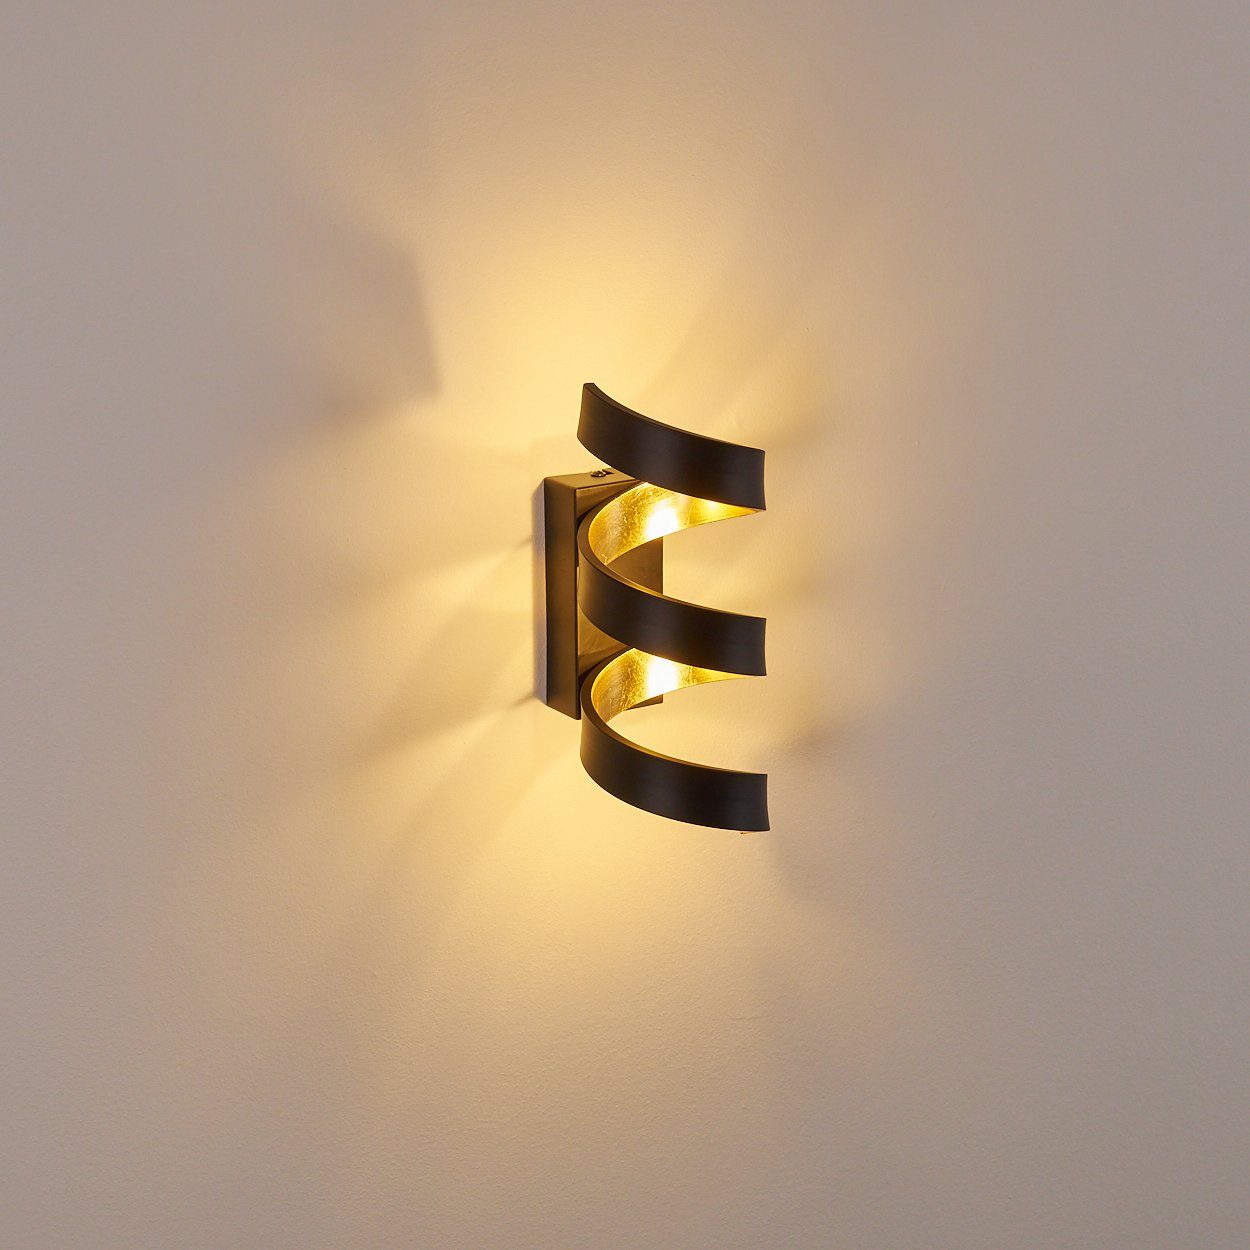 »Delia« Schwarz/Gold, 3x3 Kelvin, aus der Wandleuchte Lichteffekt 450 Wandlampe hofstein LED Lumen, Metall Innen. an Wand Watt, 3000 in